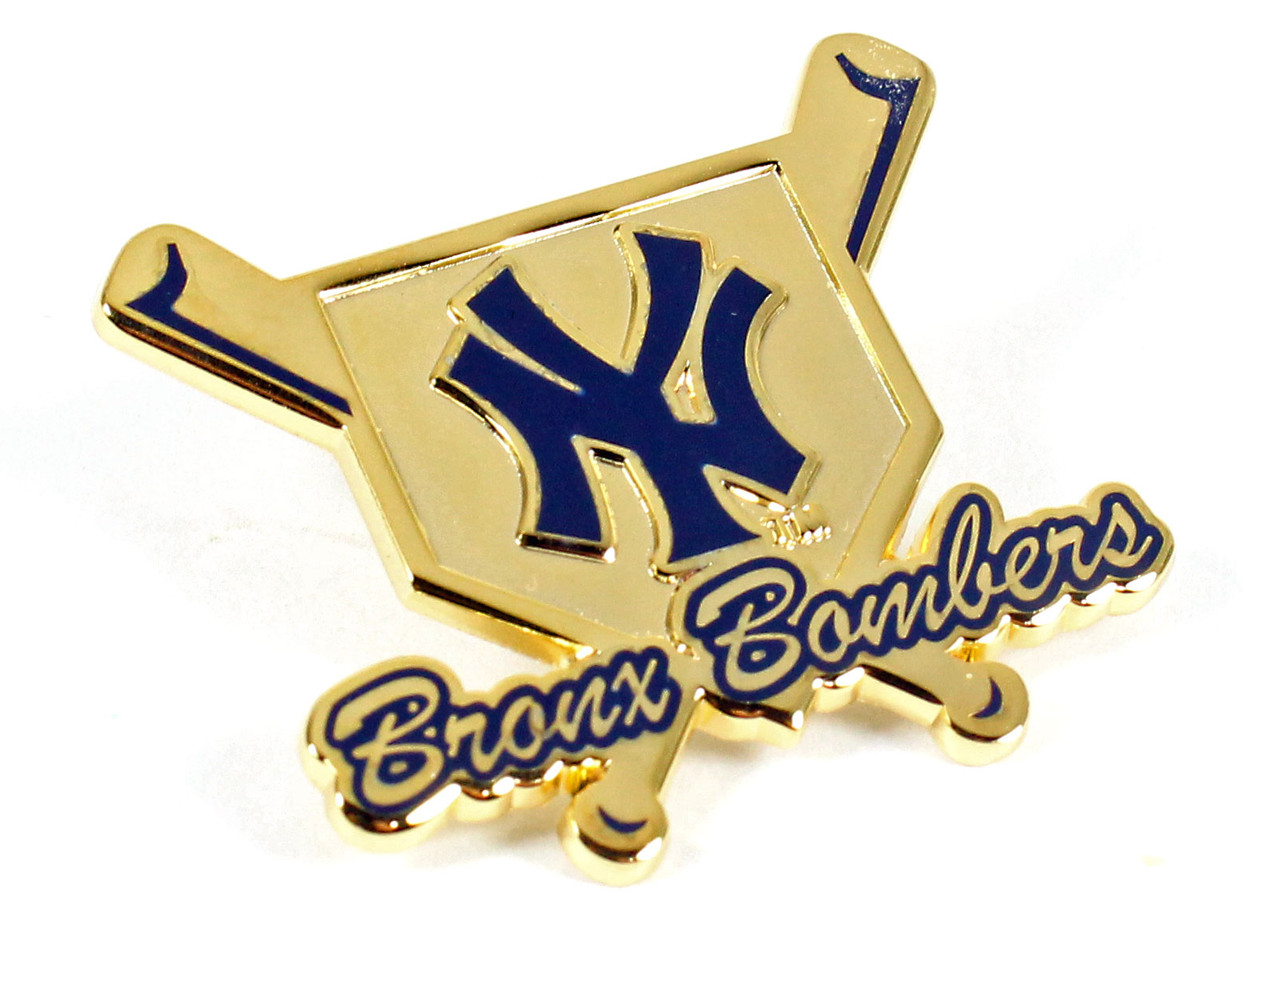 Aaron Judge New York Yankees Jersey Signature Pin